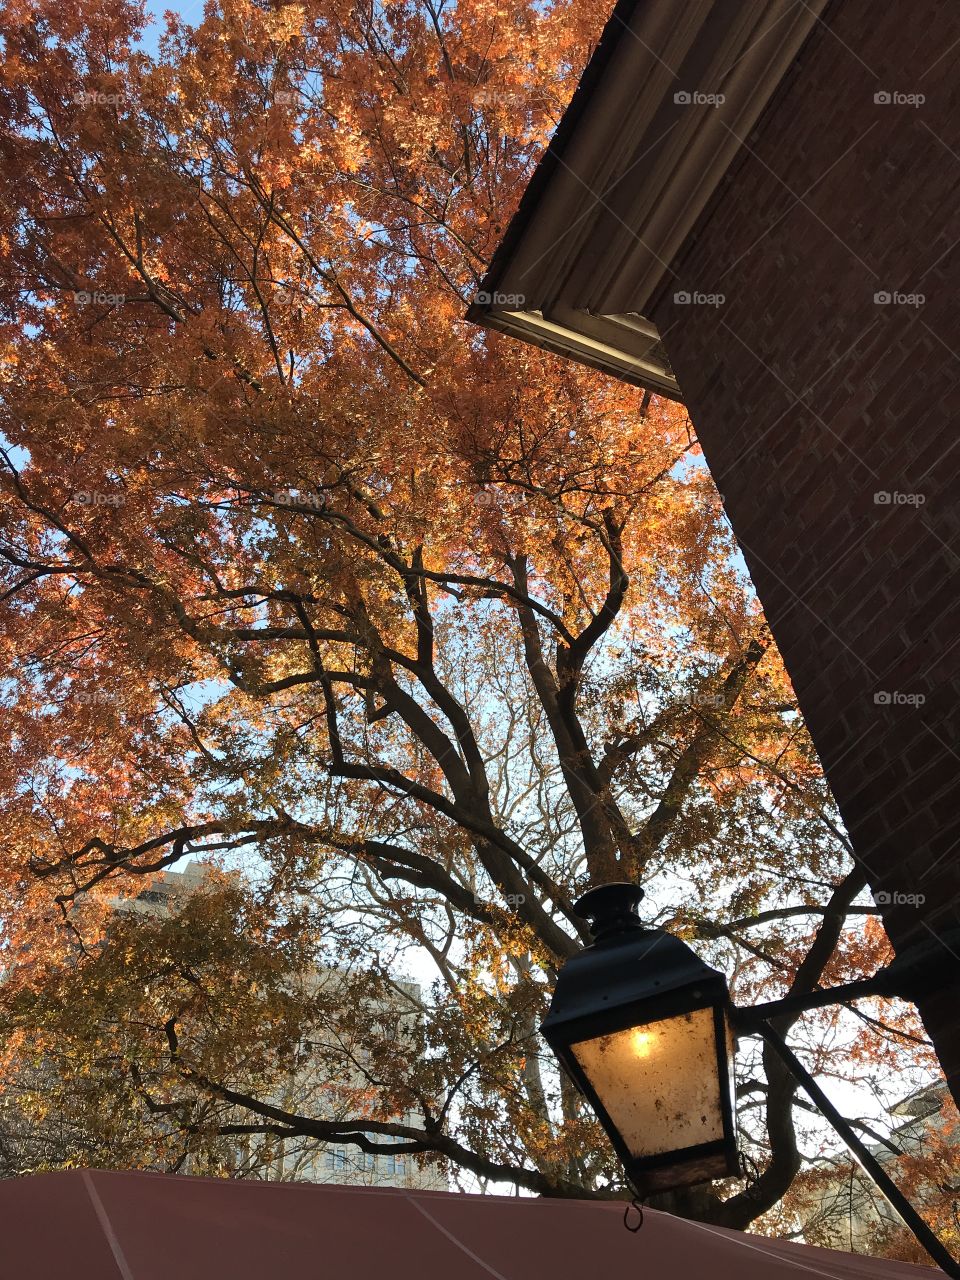 Fall trees by lamplight 